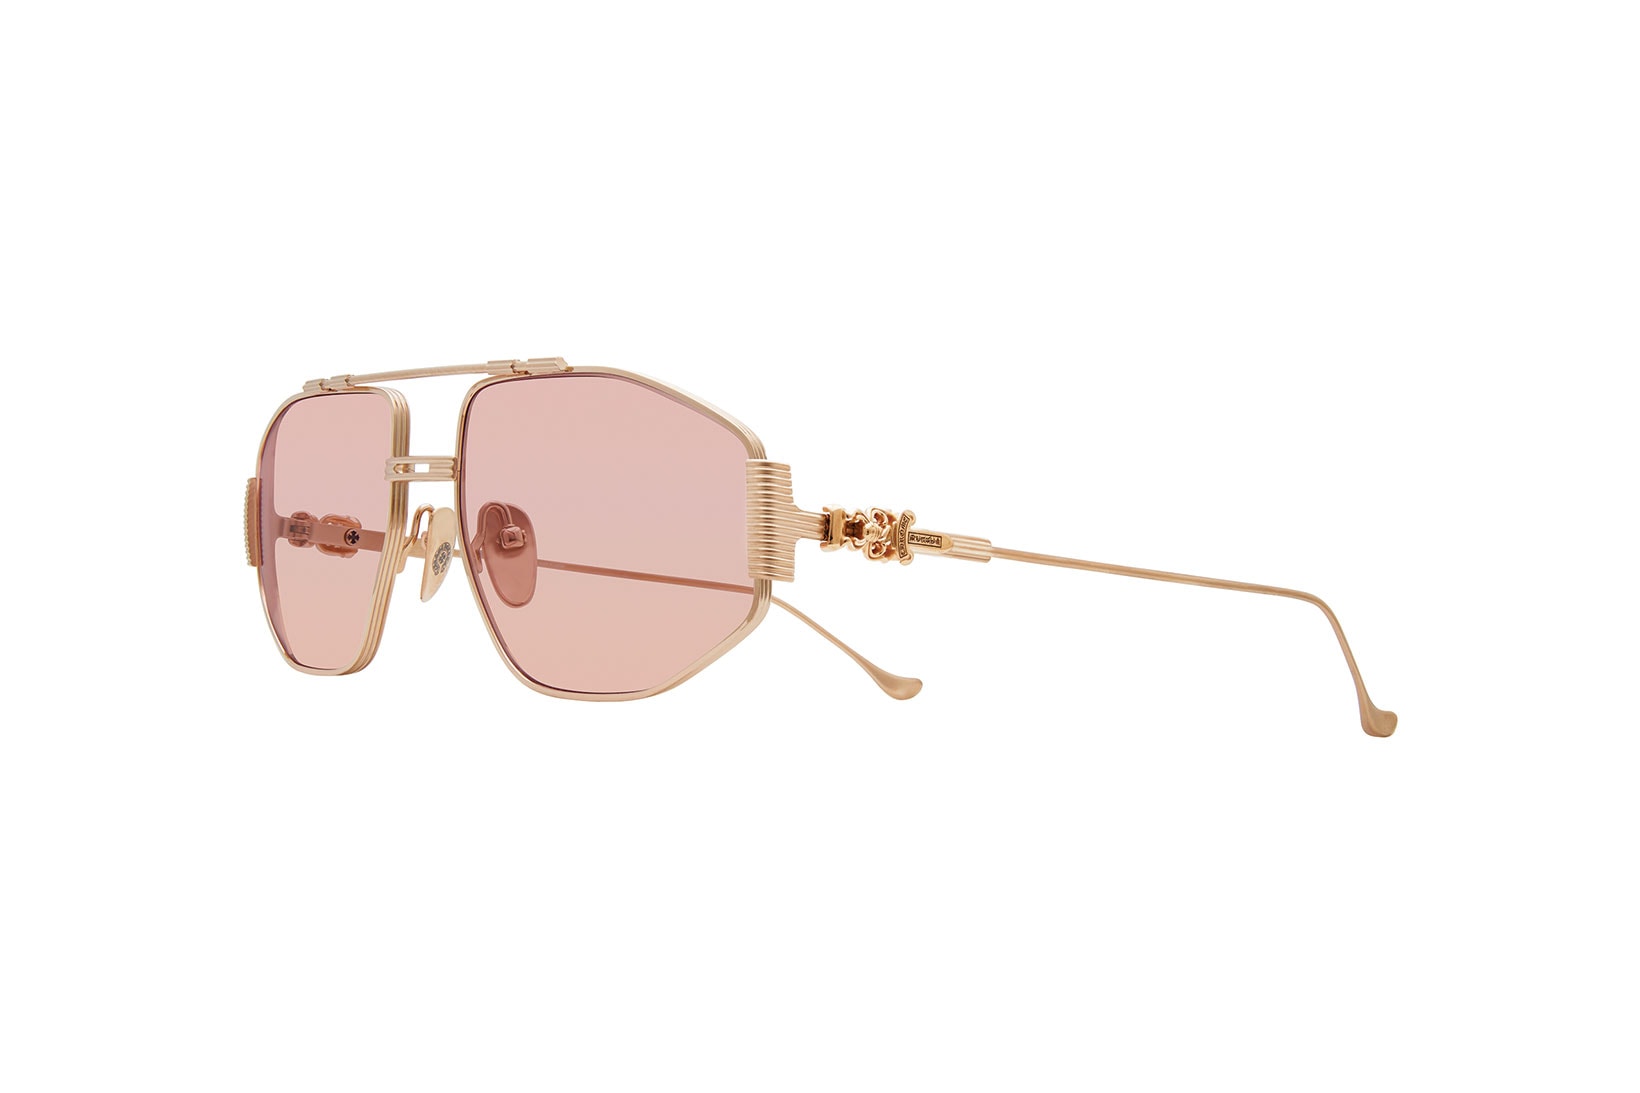 chrome hearts jordan barrett sunglasses capsule collection eyewear supermodel jesse jo stark